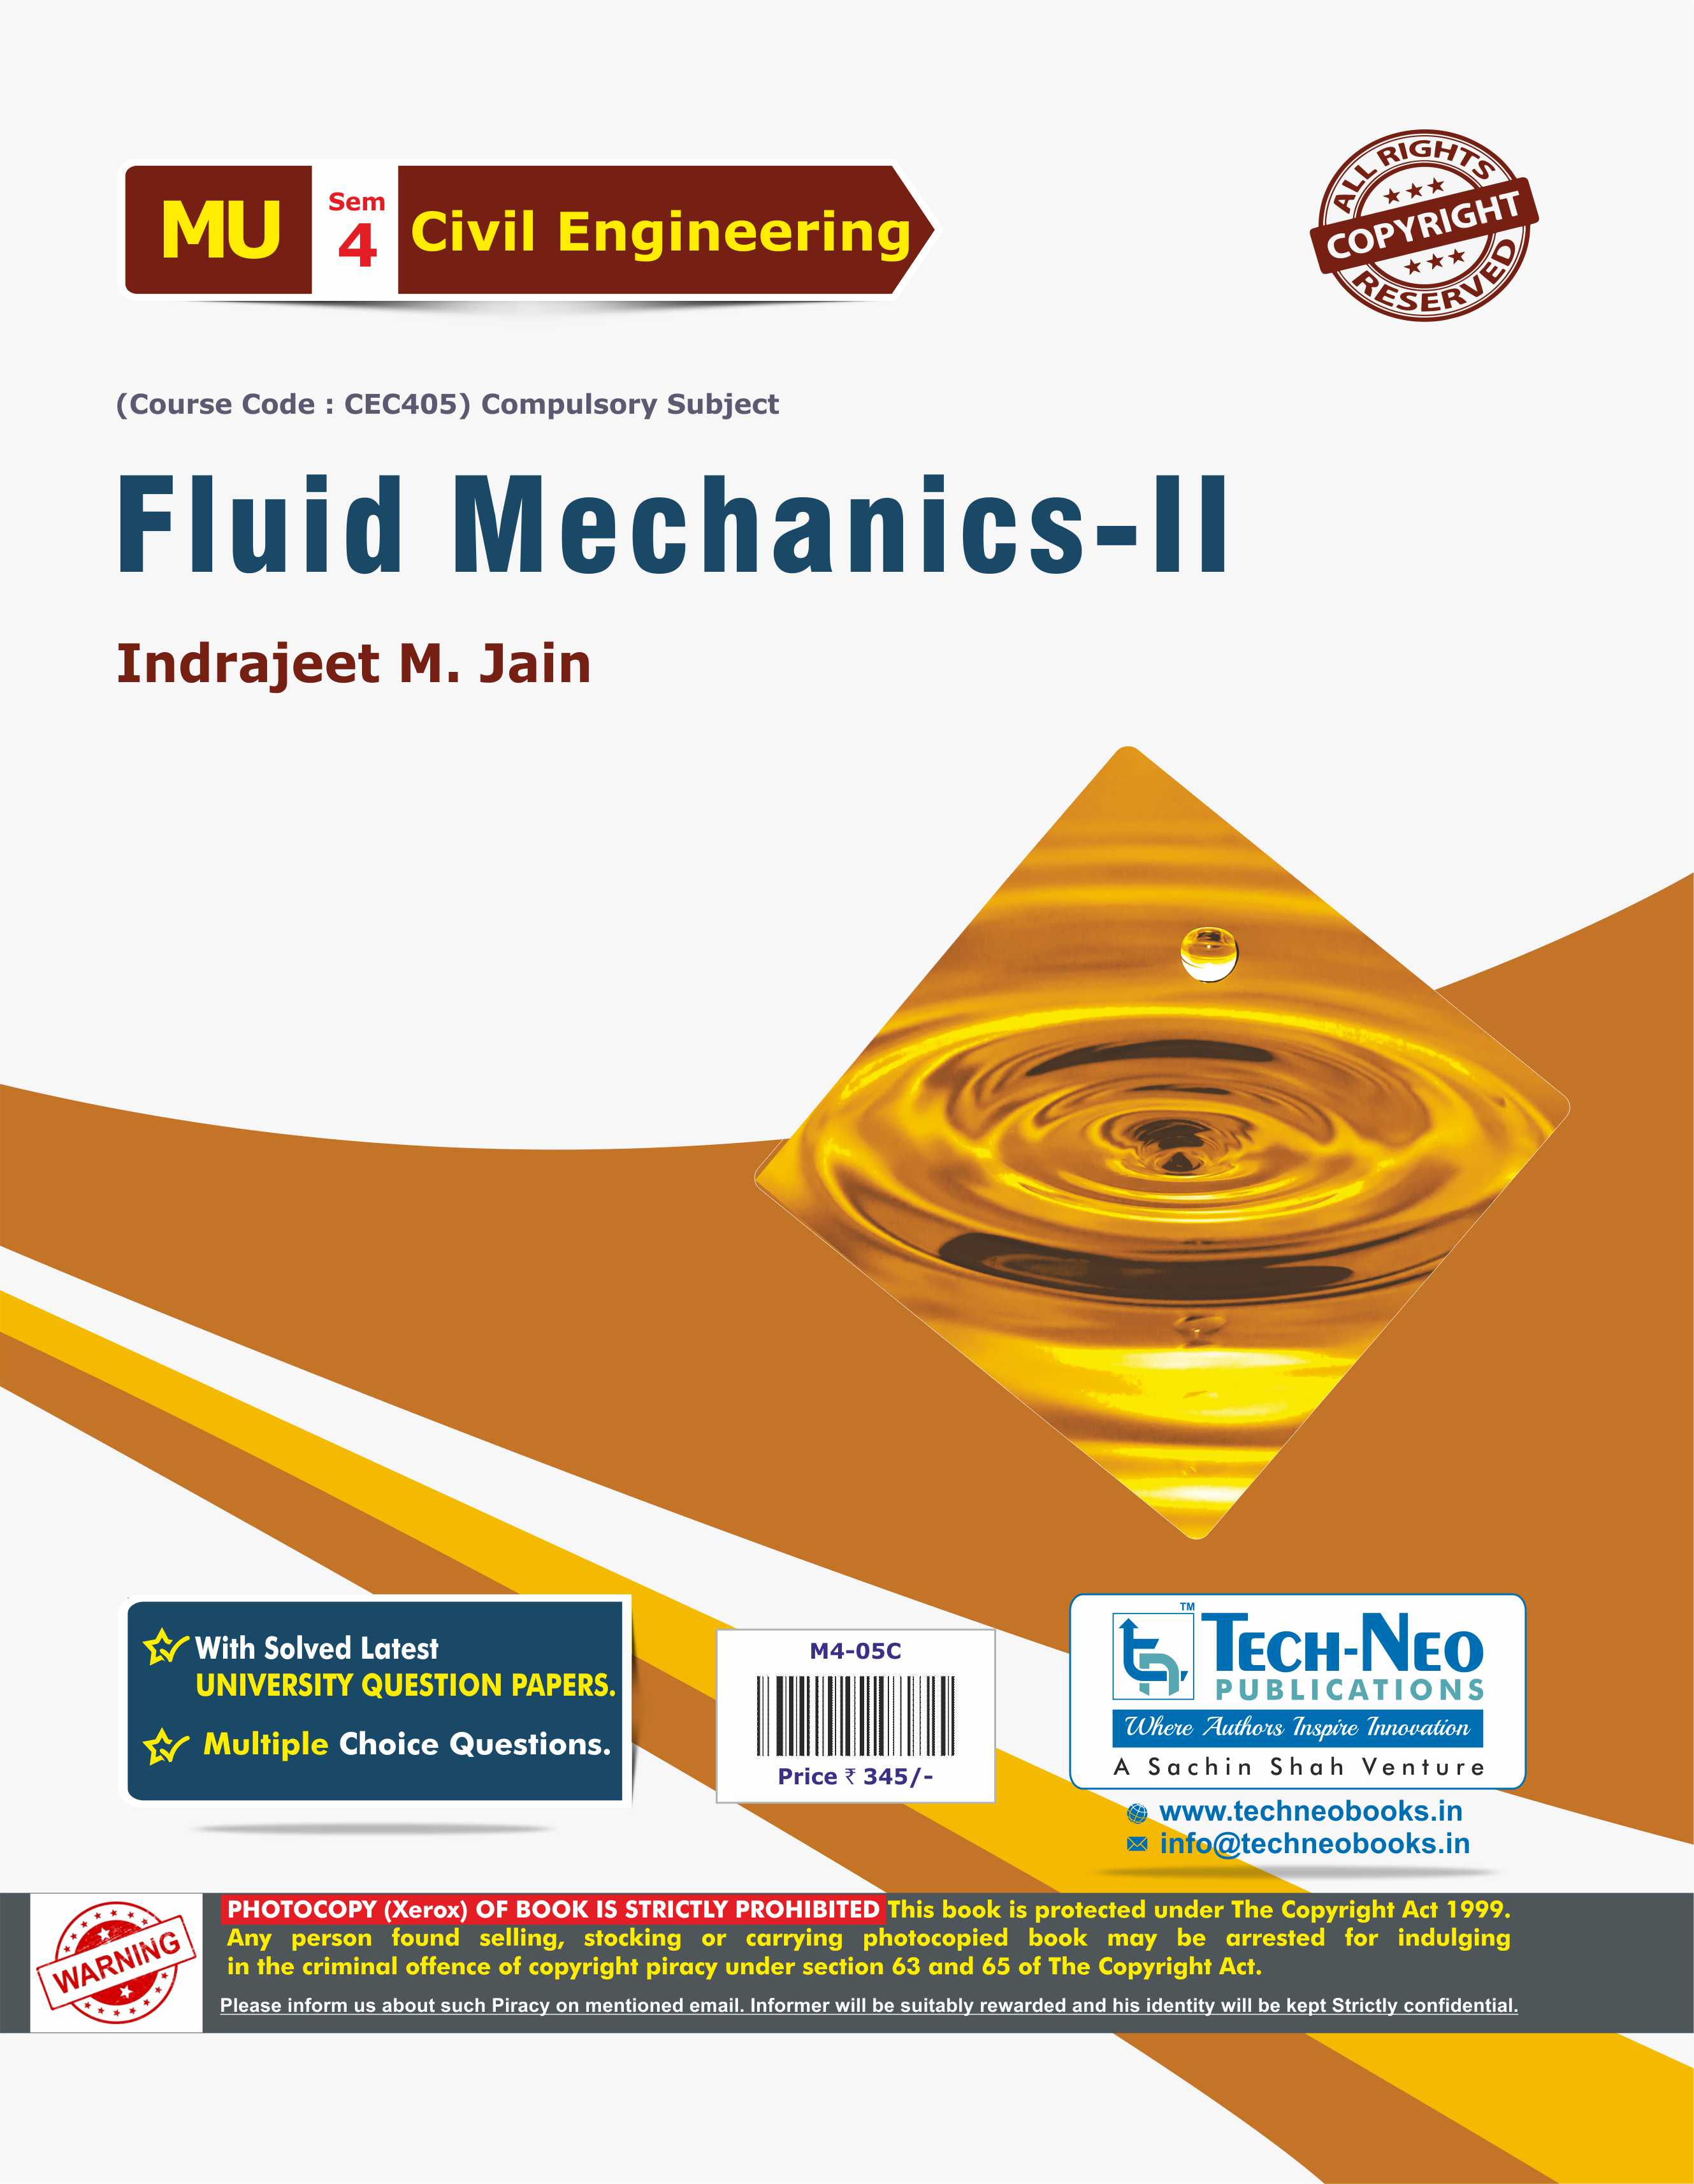 Fluid mechanics - II (CEC405)